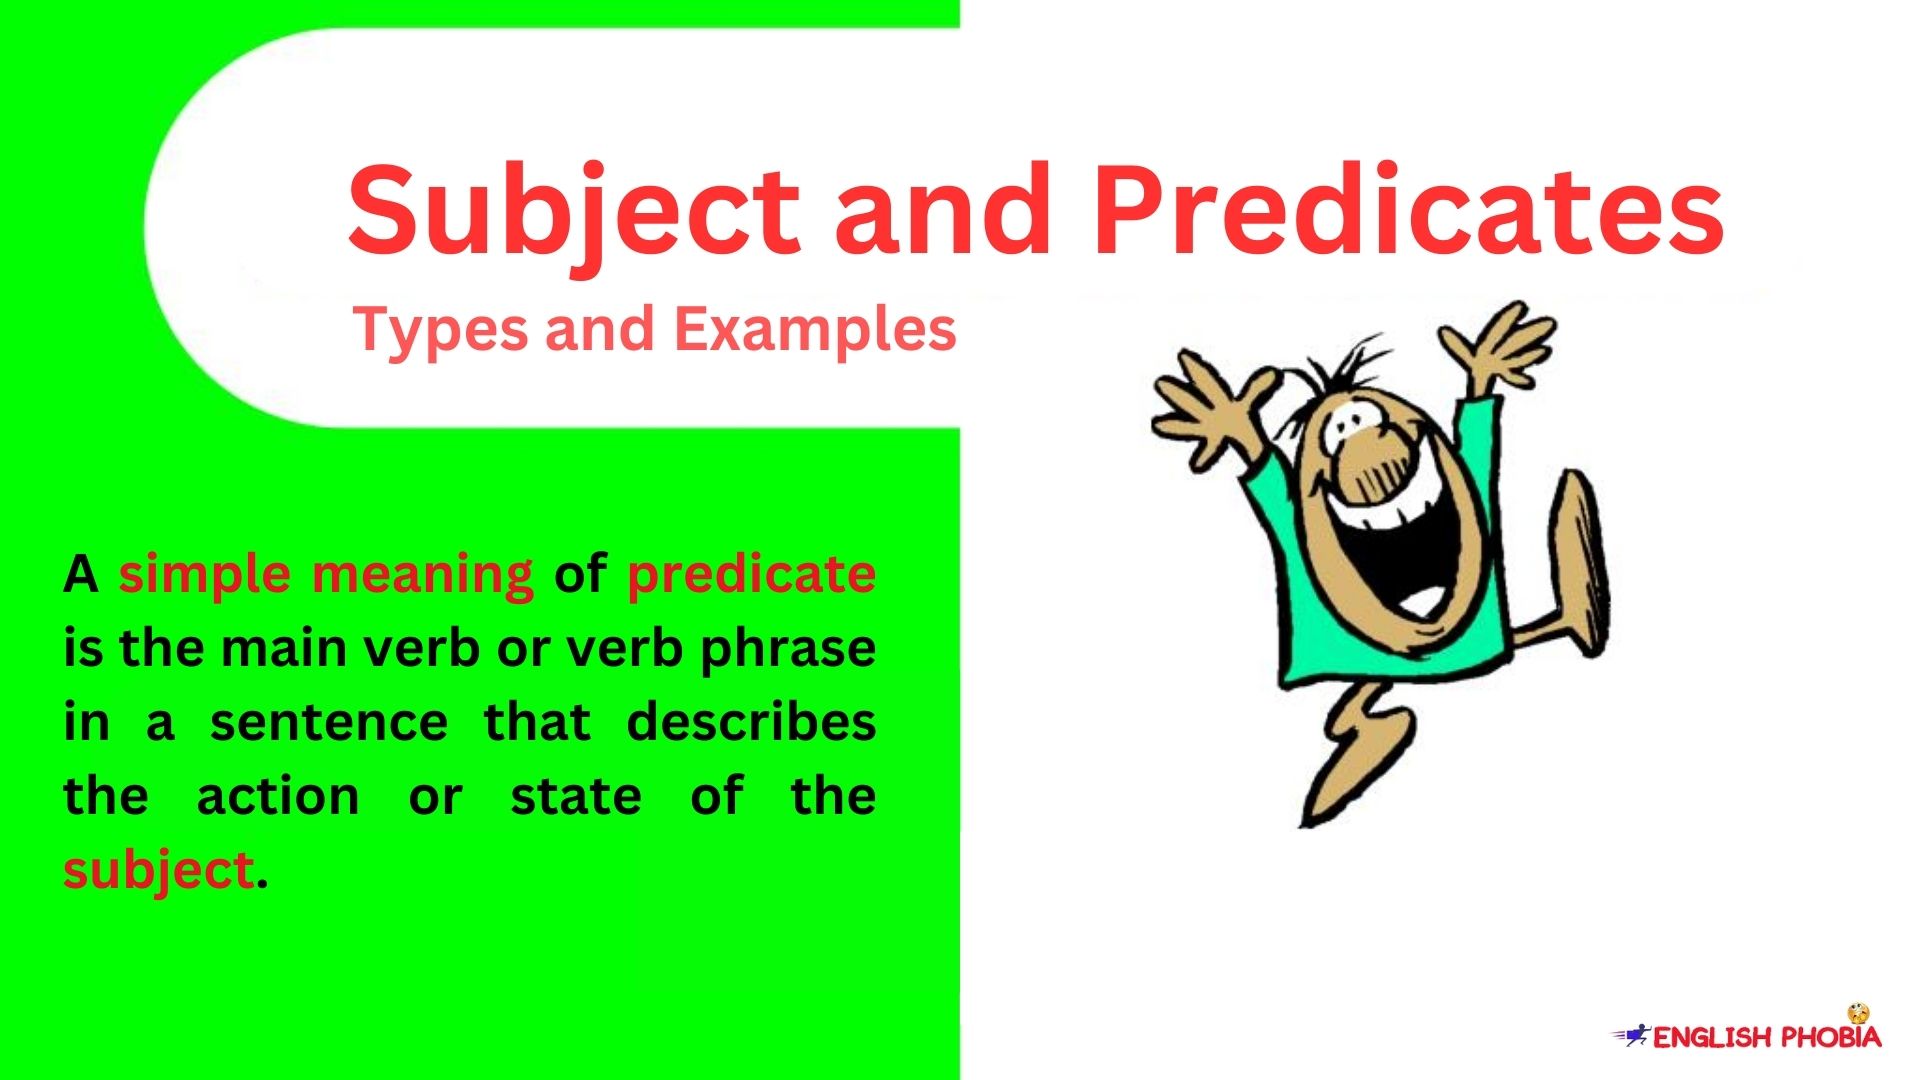 Subject and Predicates